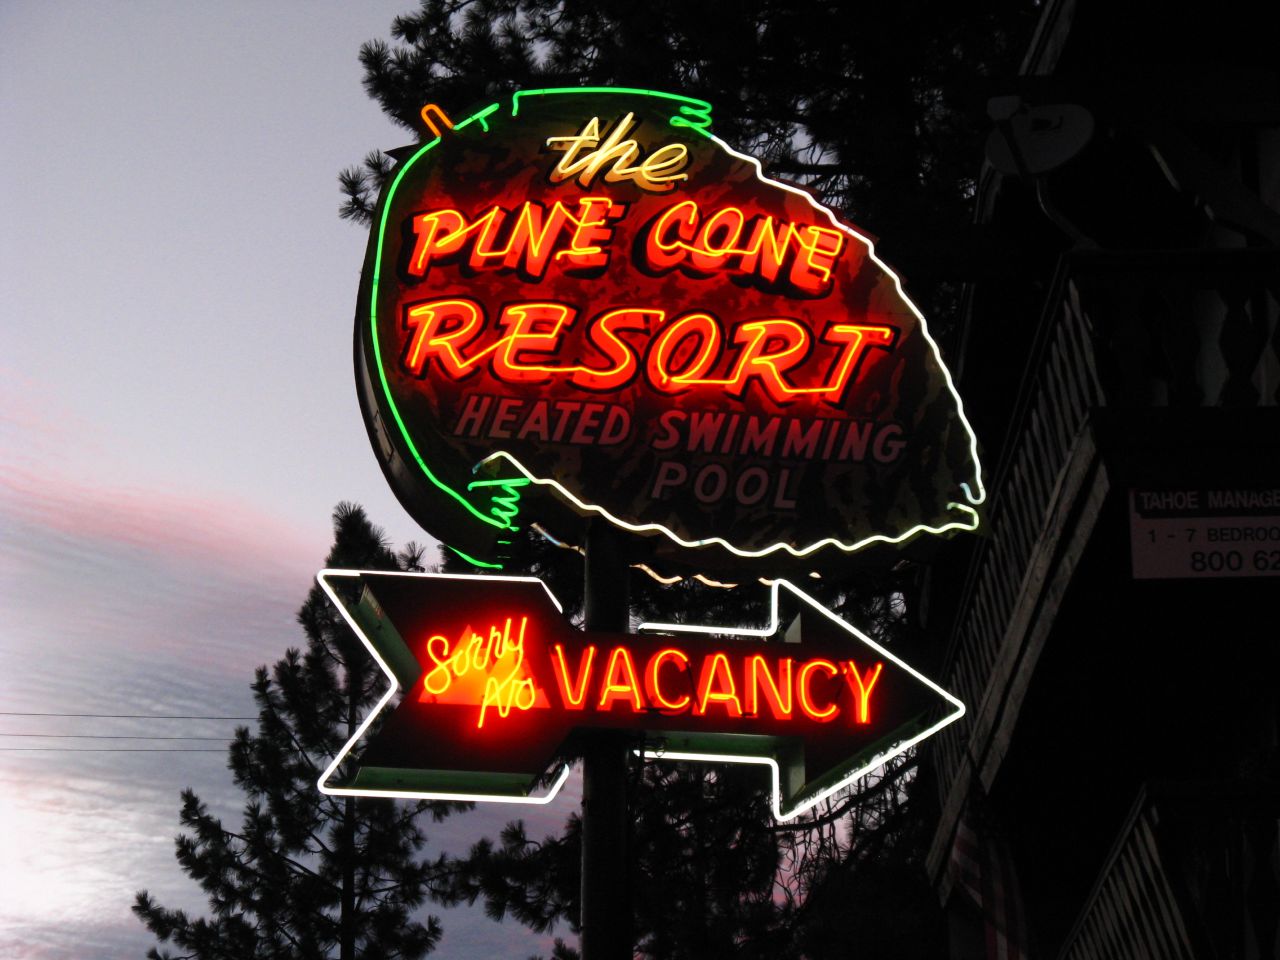 Pine Cone Resort - 601 U.S. 50, Zephyr Cove, Nevada U.S.A. - August 6, 2008